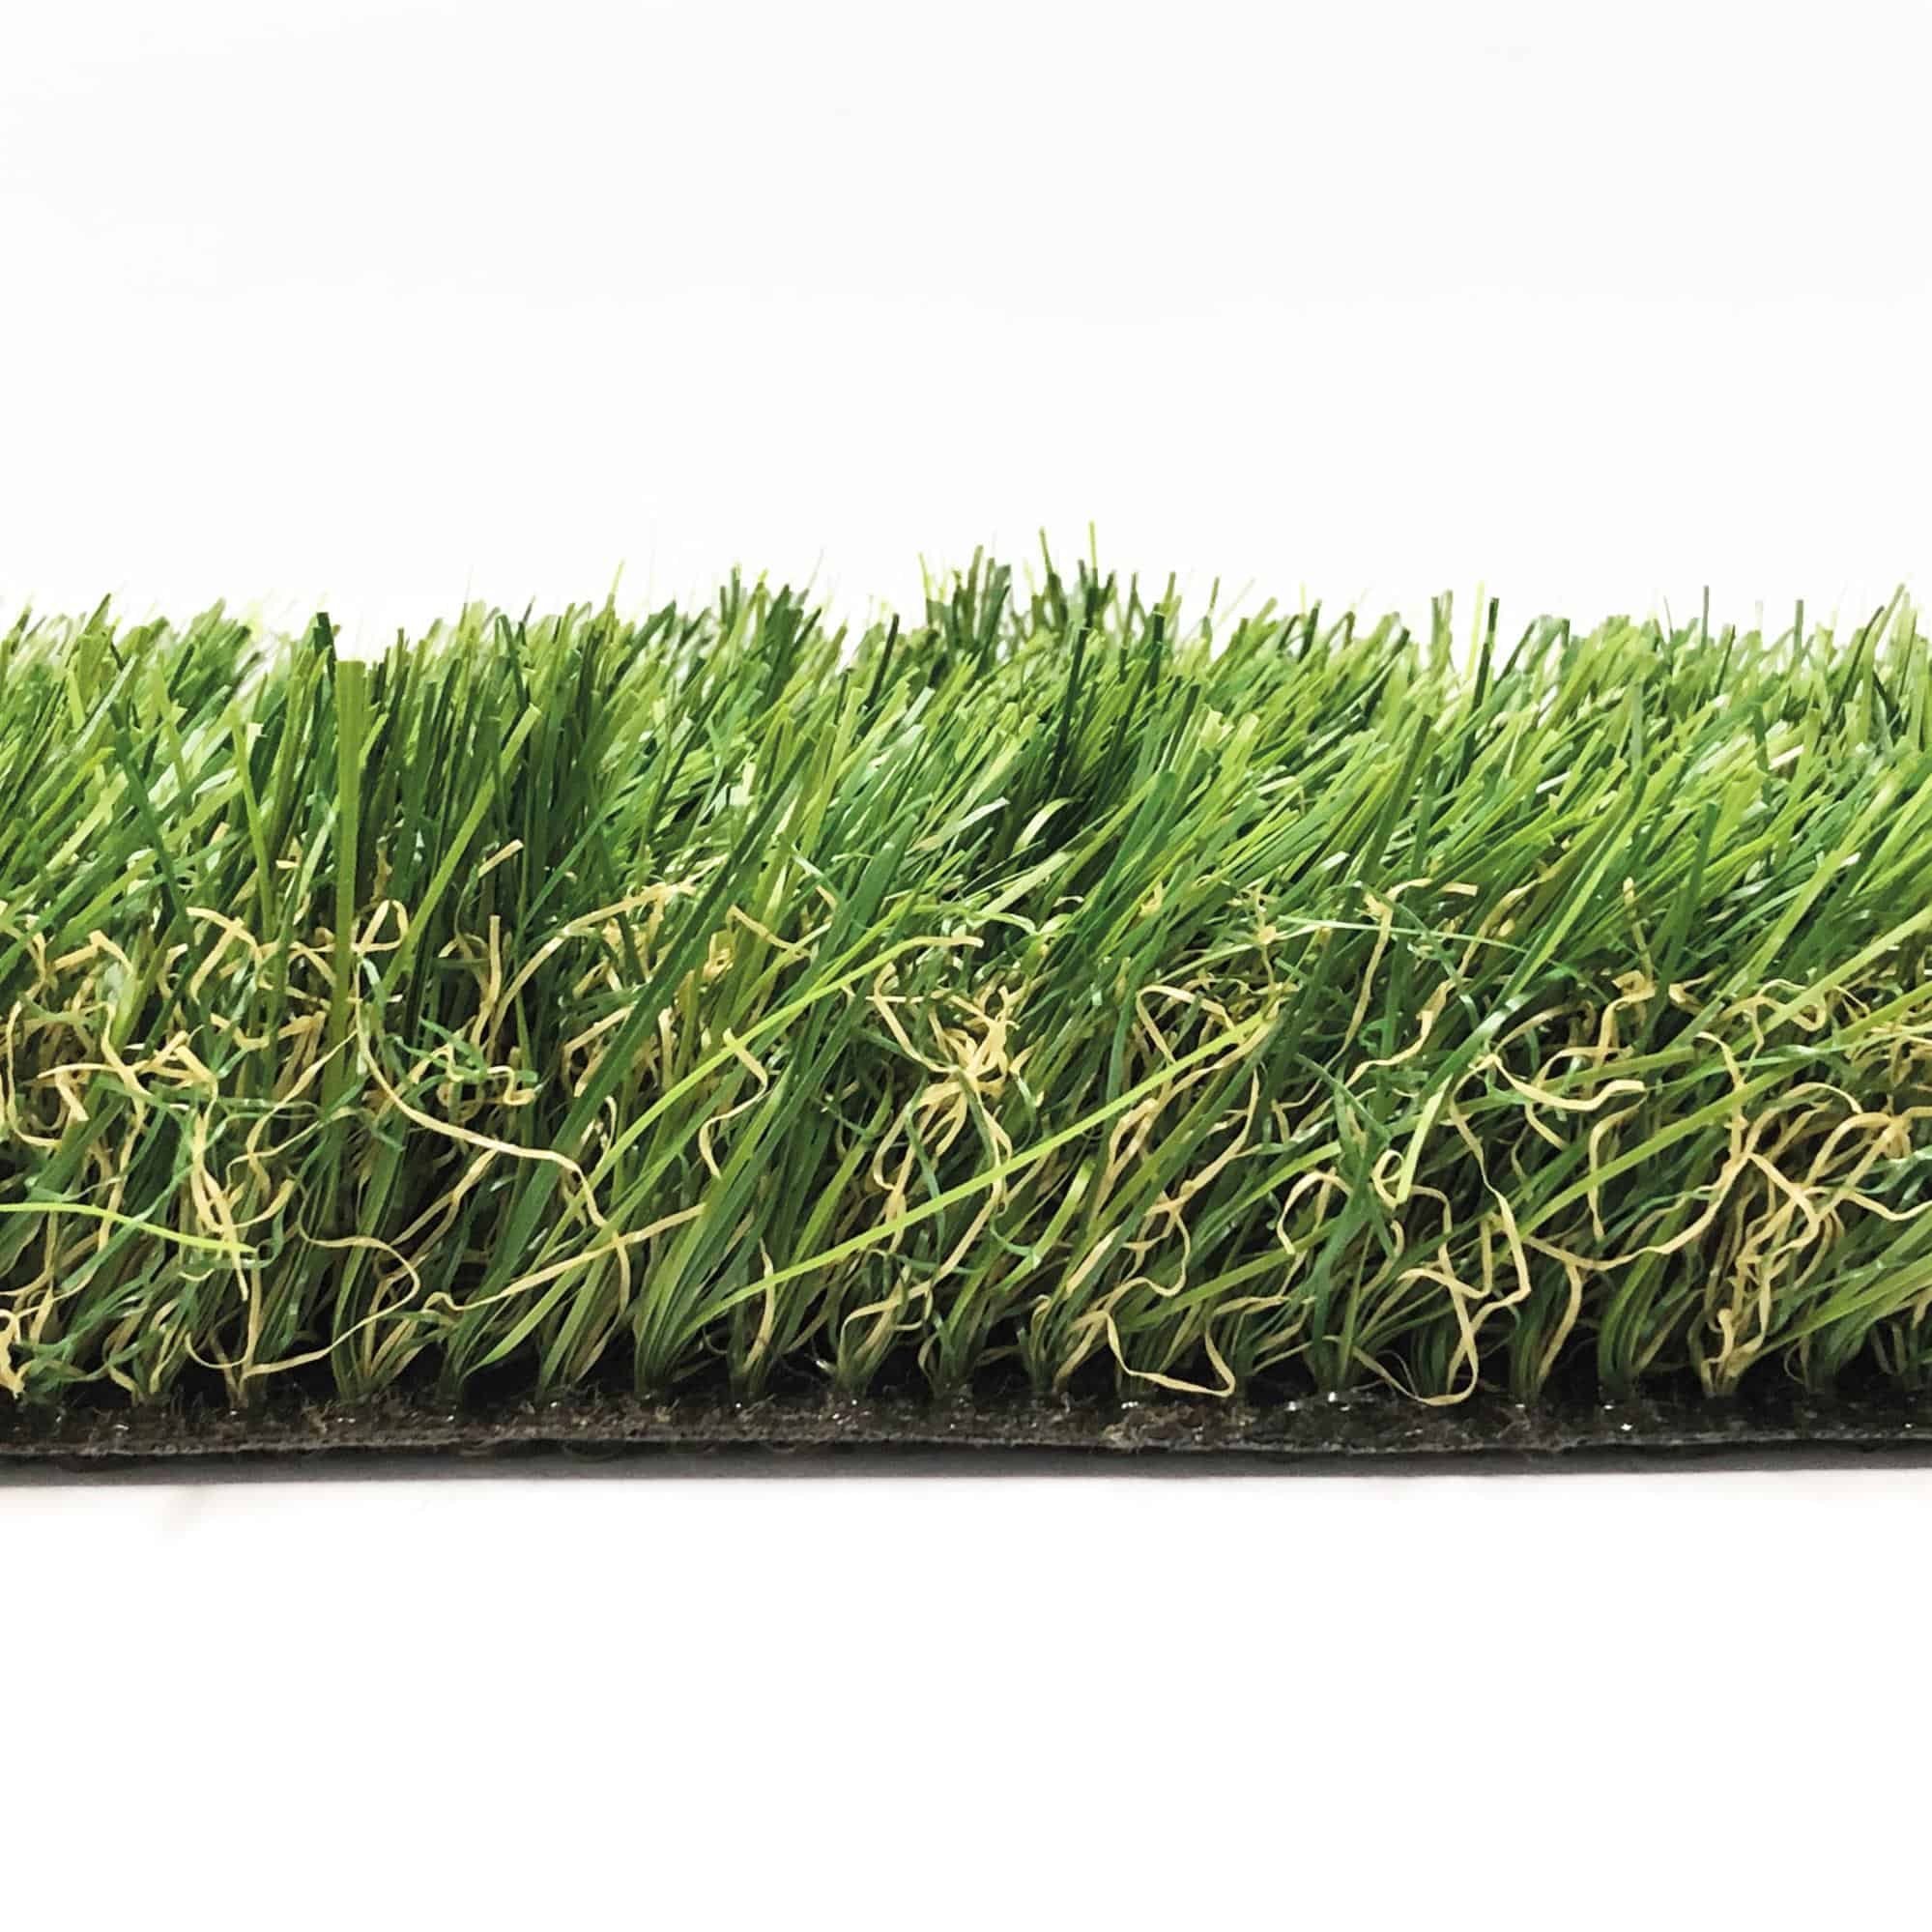 CORE Lawn Natural Artificial Grass 4m Wide Roll 6 m